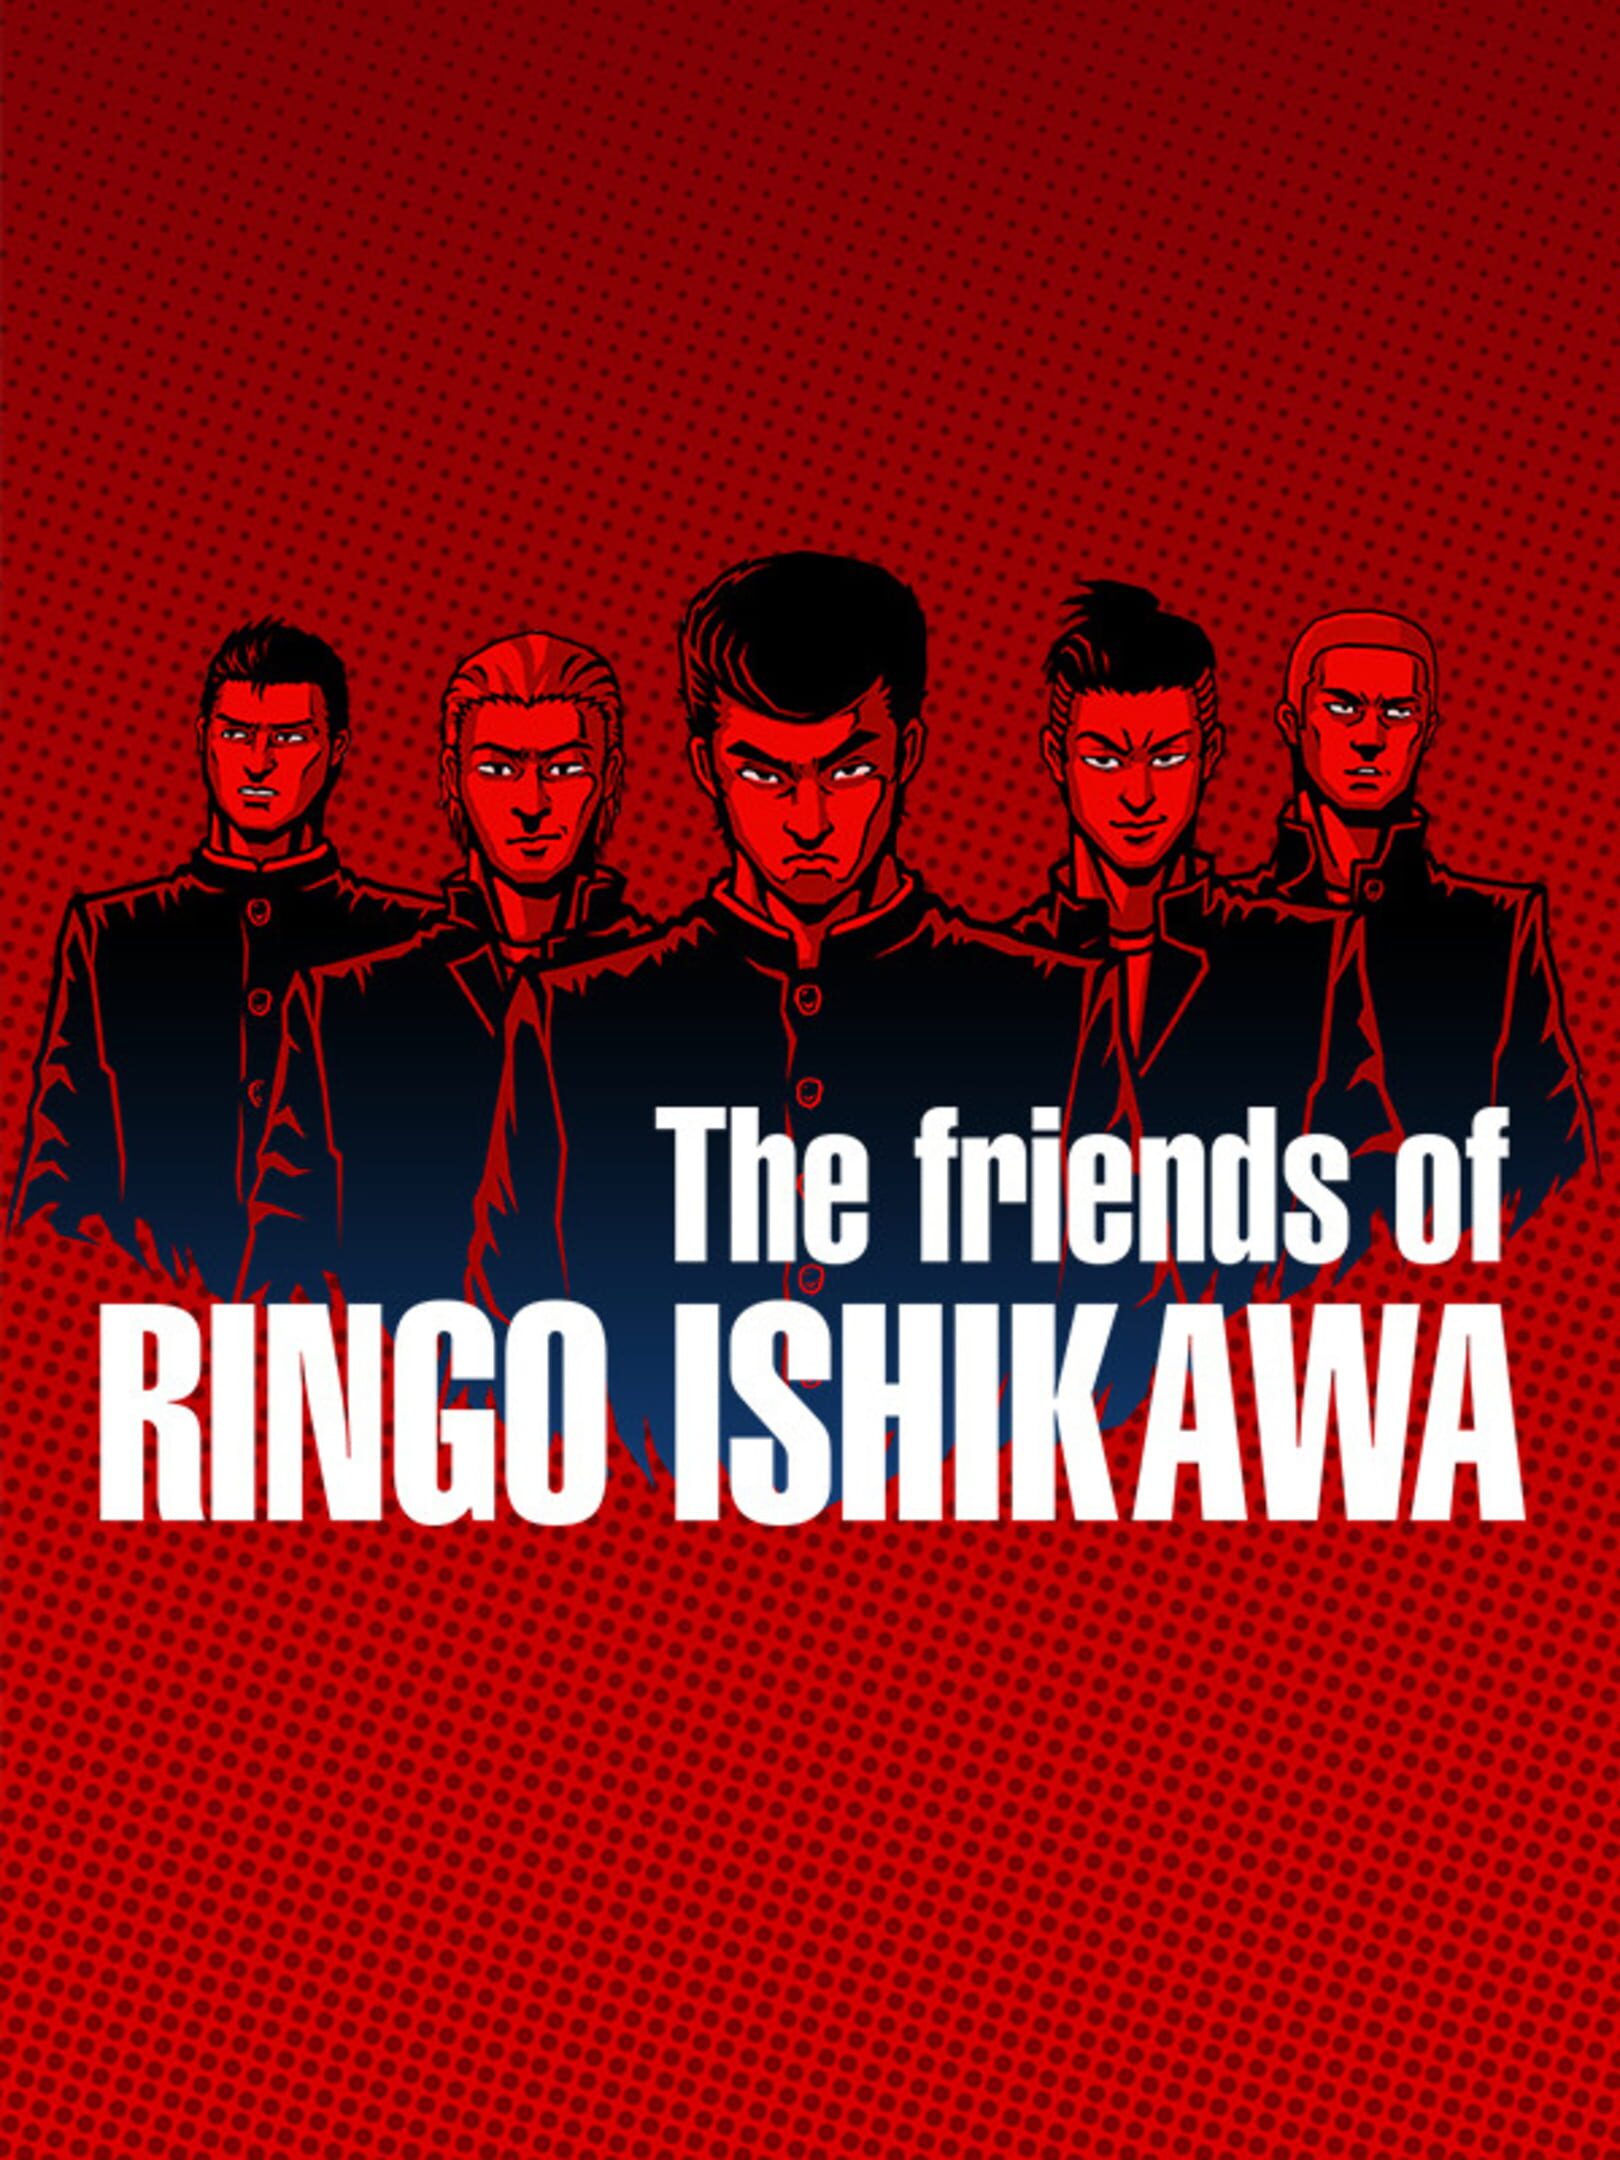 The friends of ringo. Ringo Ishikawa. The friends of Ringo Ishikawa постеры. Ringo Ishikawa Art.